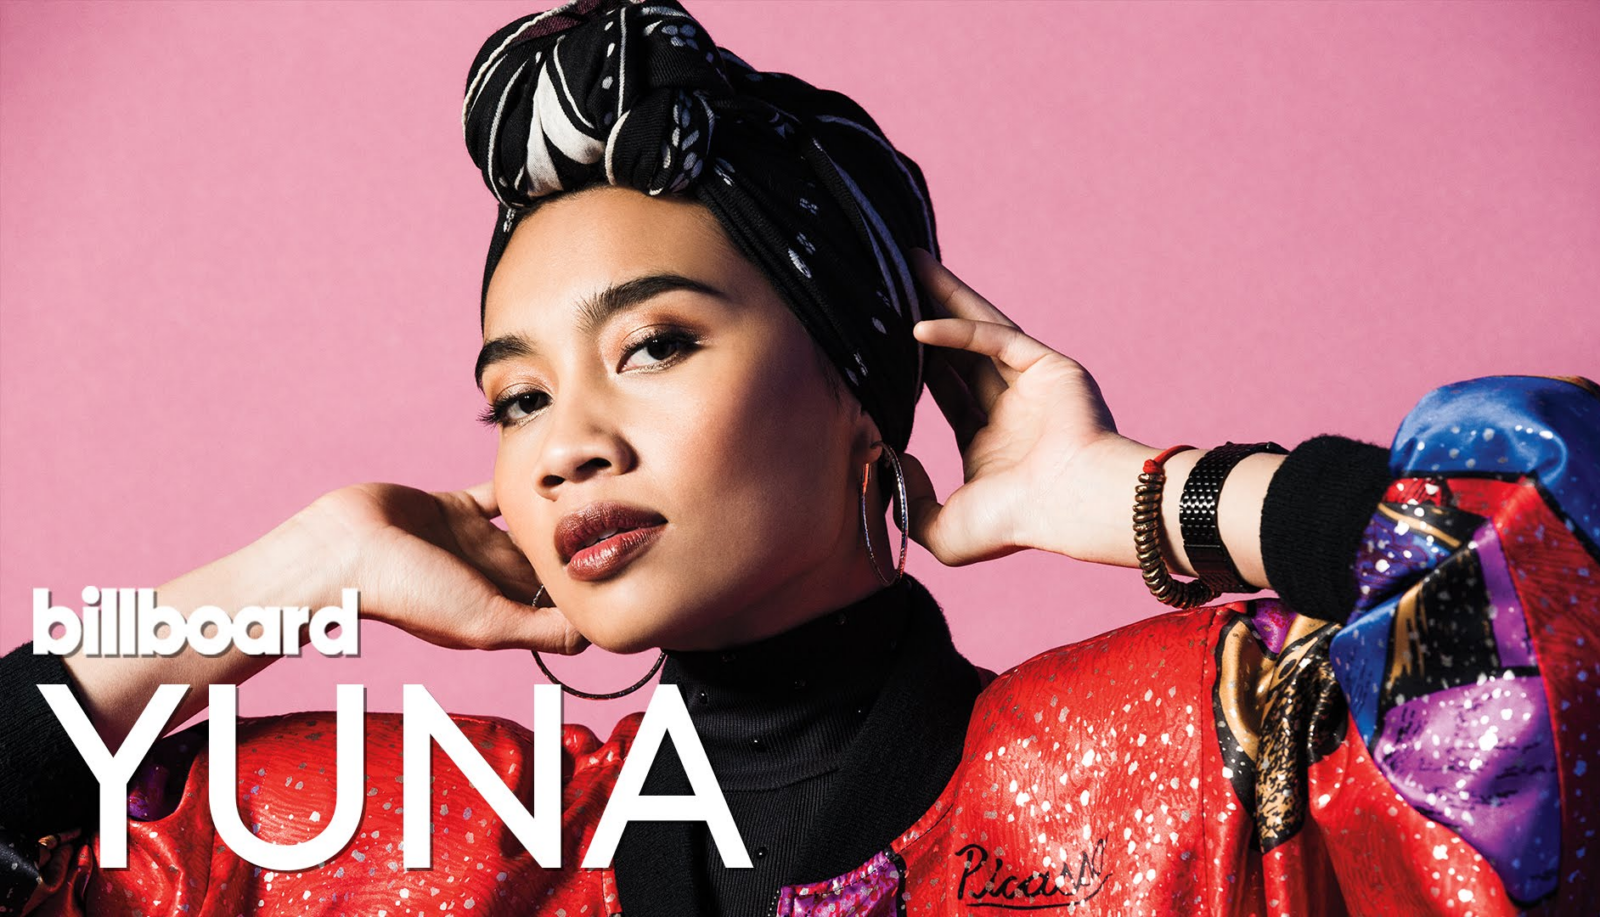 Malaysia's Darling Yuna Now Ranked Alongside BeyoncÃ©, Rihanna - World Of Buzz